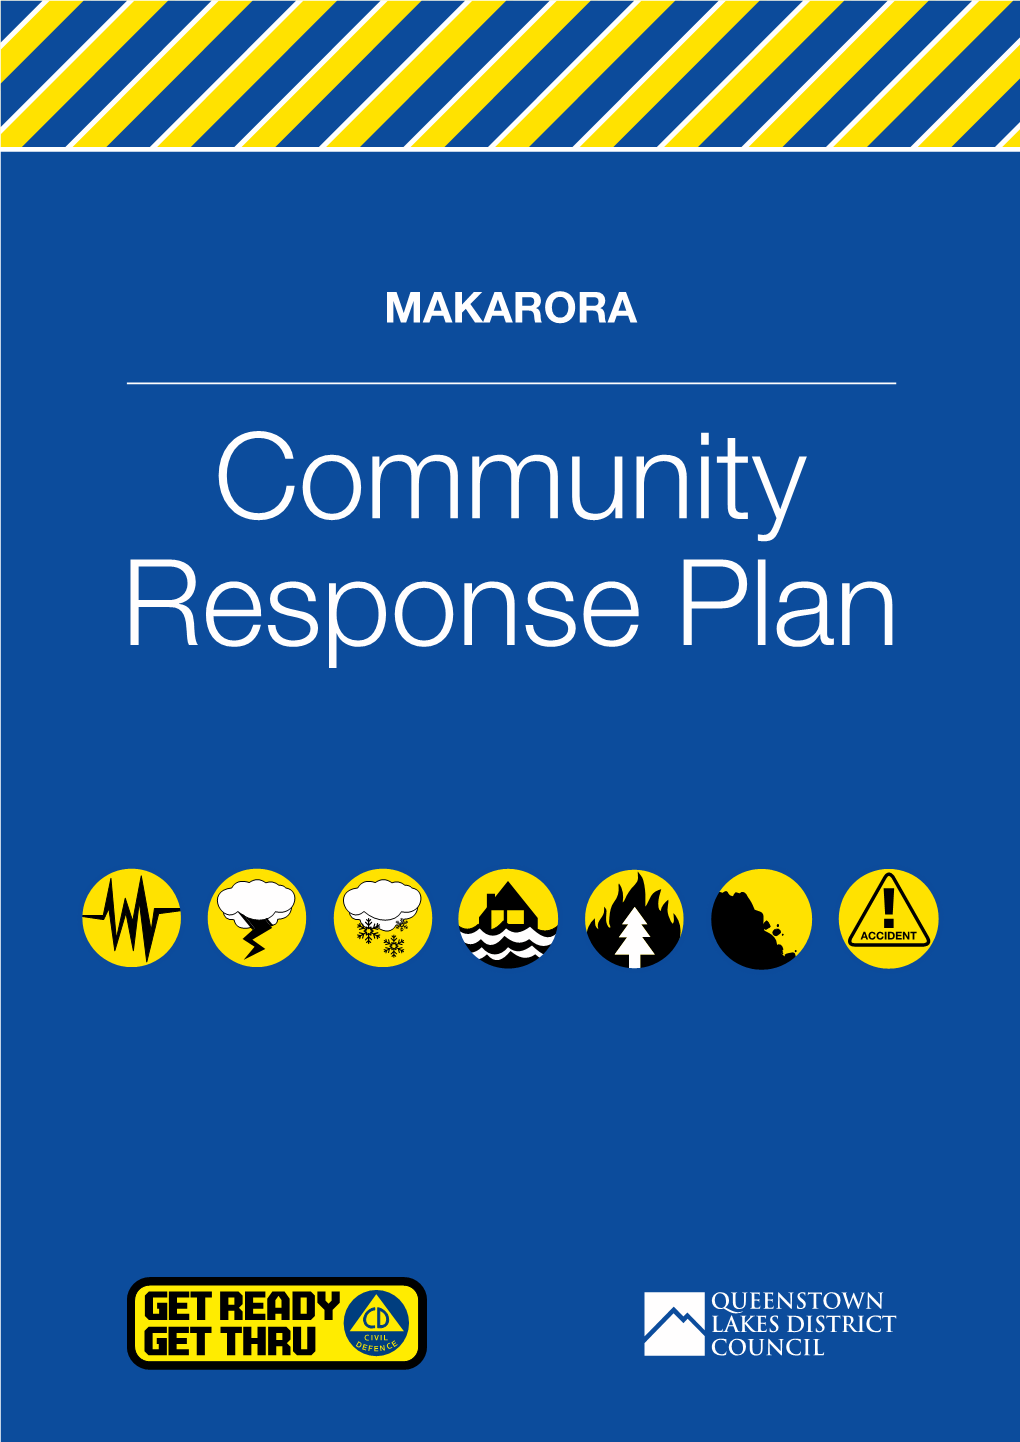 MAKARORA Community Response Plan Contents